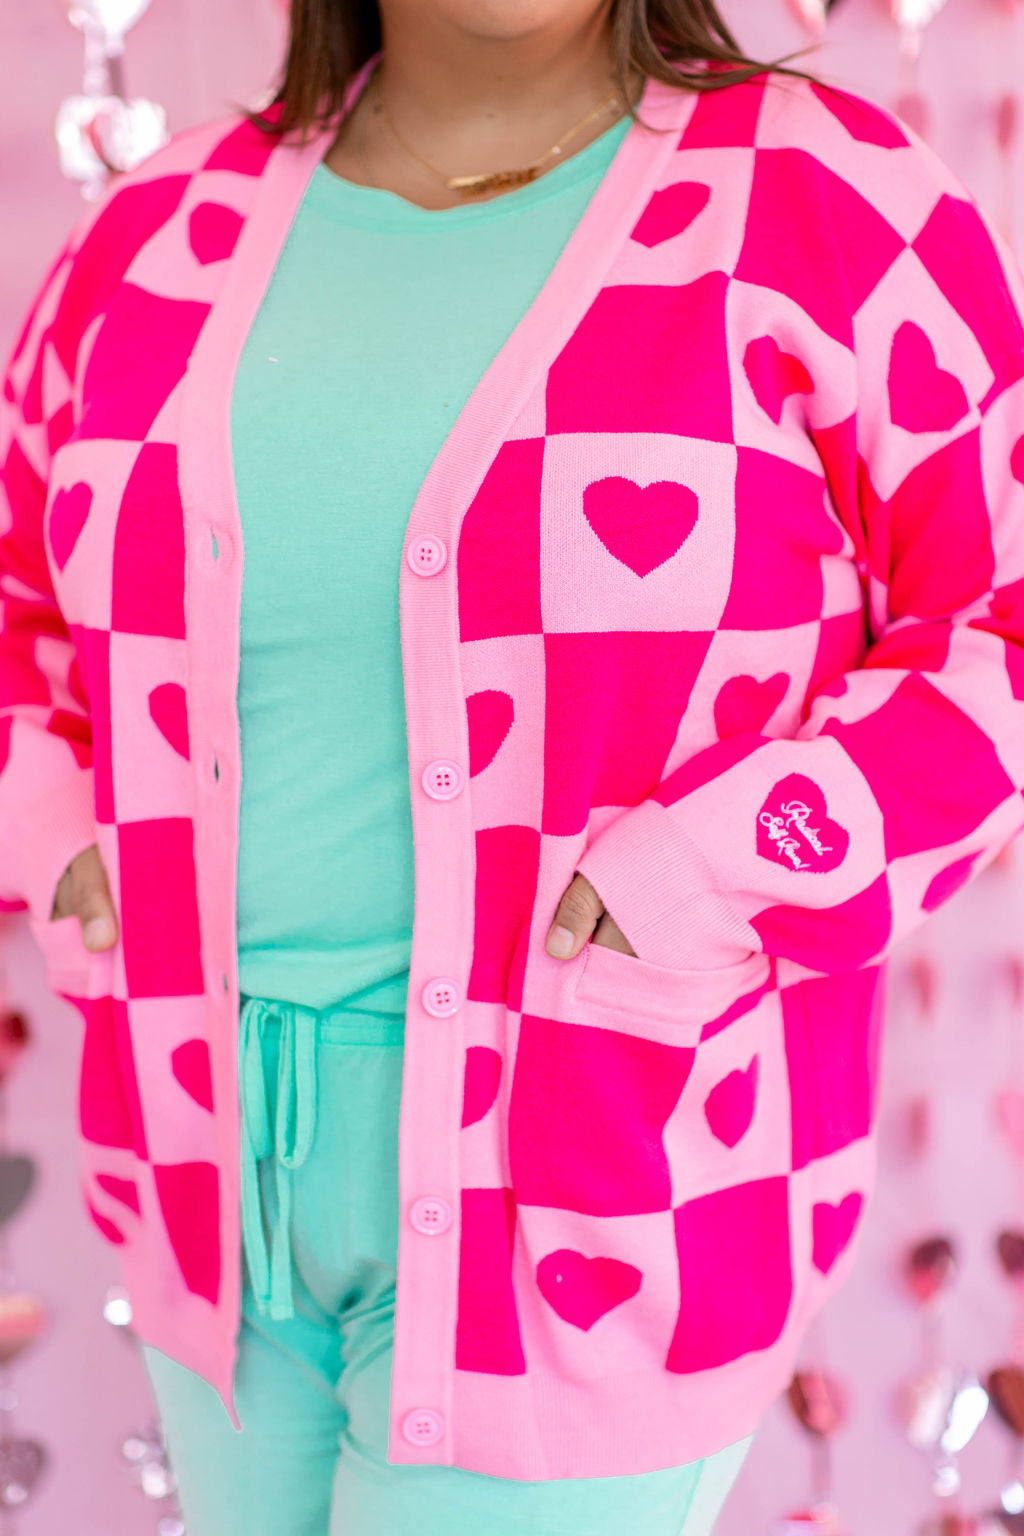 TABY ORIGINAL: Radical Self Love Cardigan In PINK*** Sizes XS-5X!***